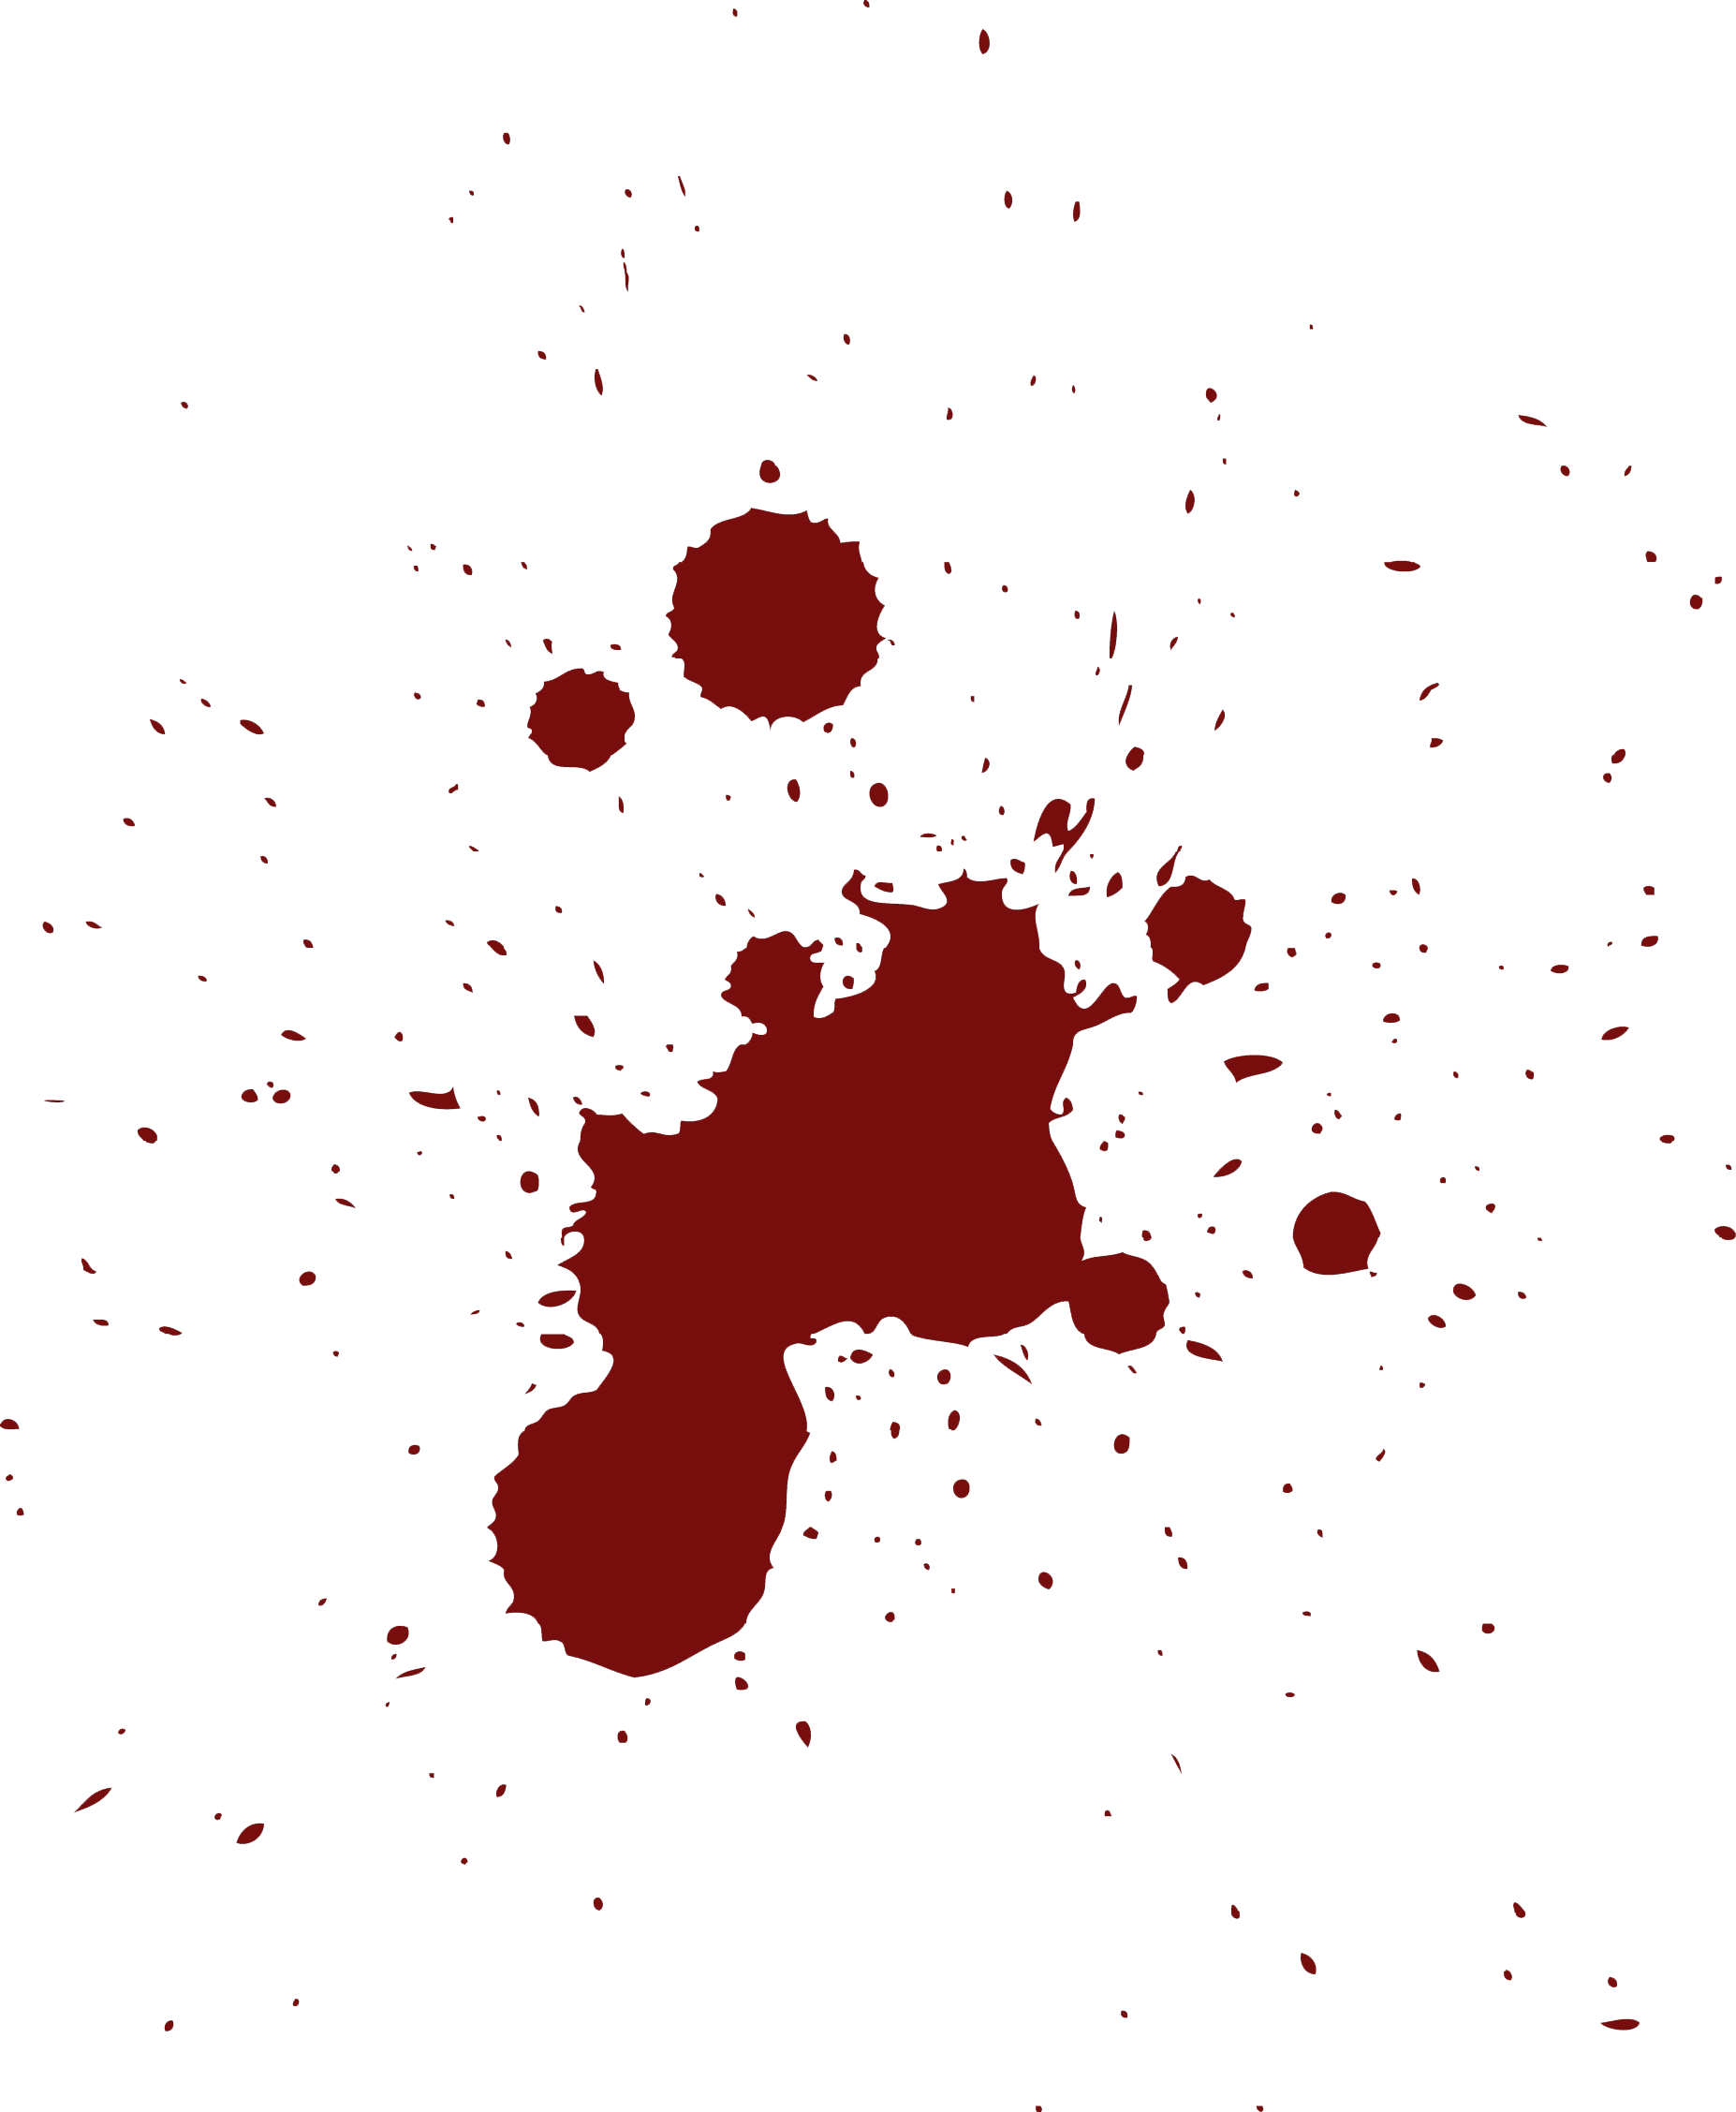 Blood Clip art - Blood Download Png png download - 1854*2255 - Free